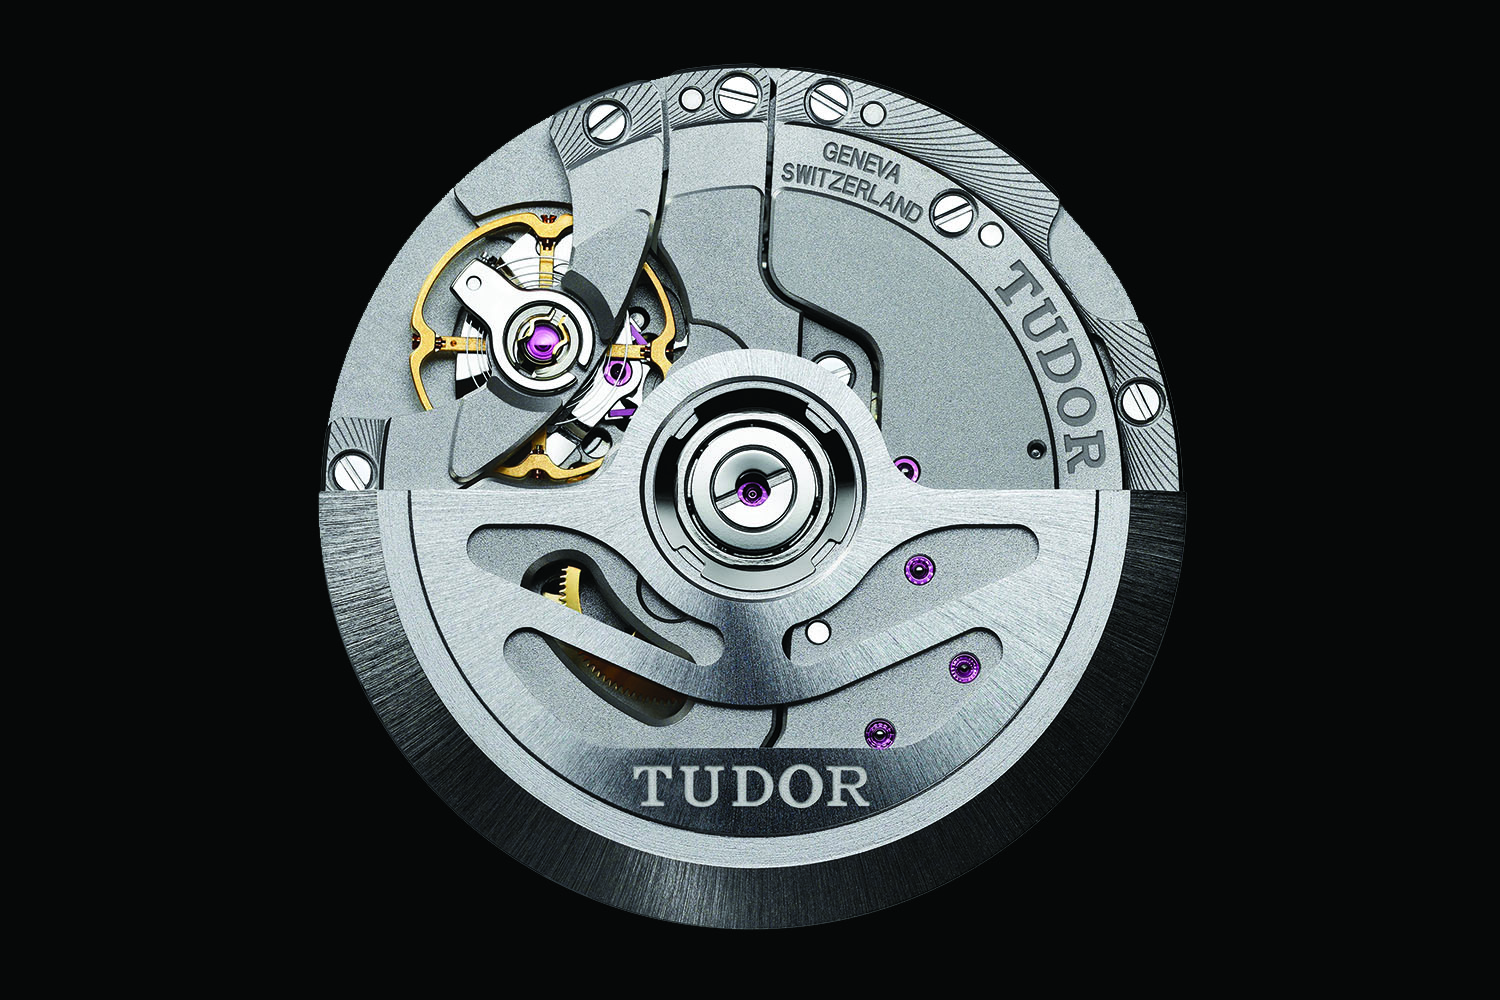 Tudor MT5612 Manufacture movement